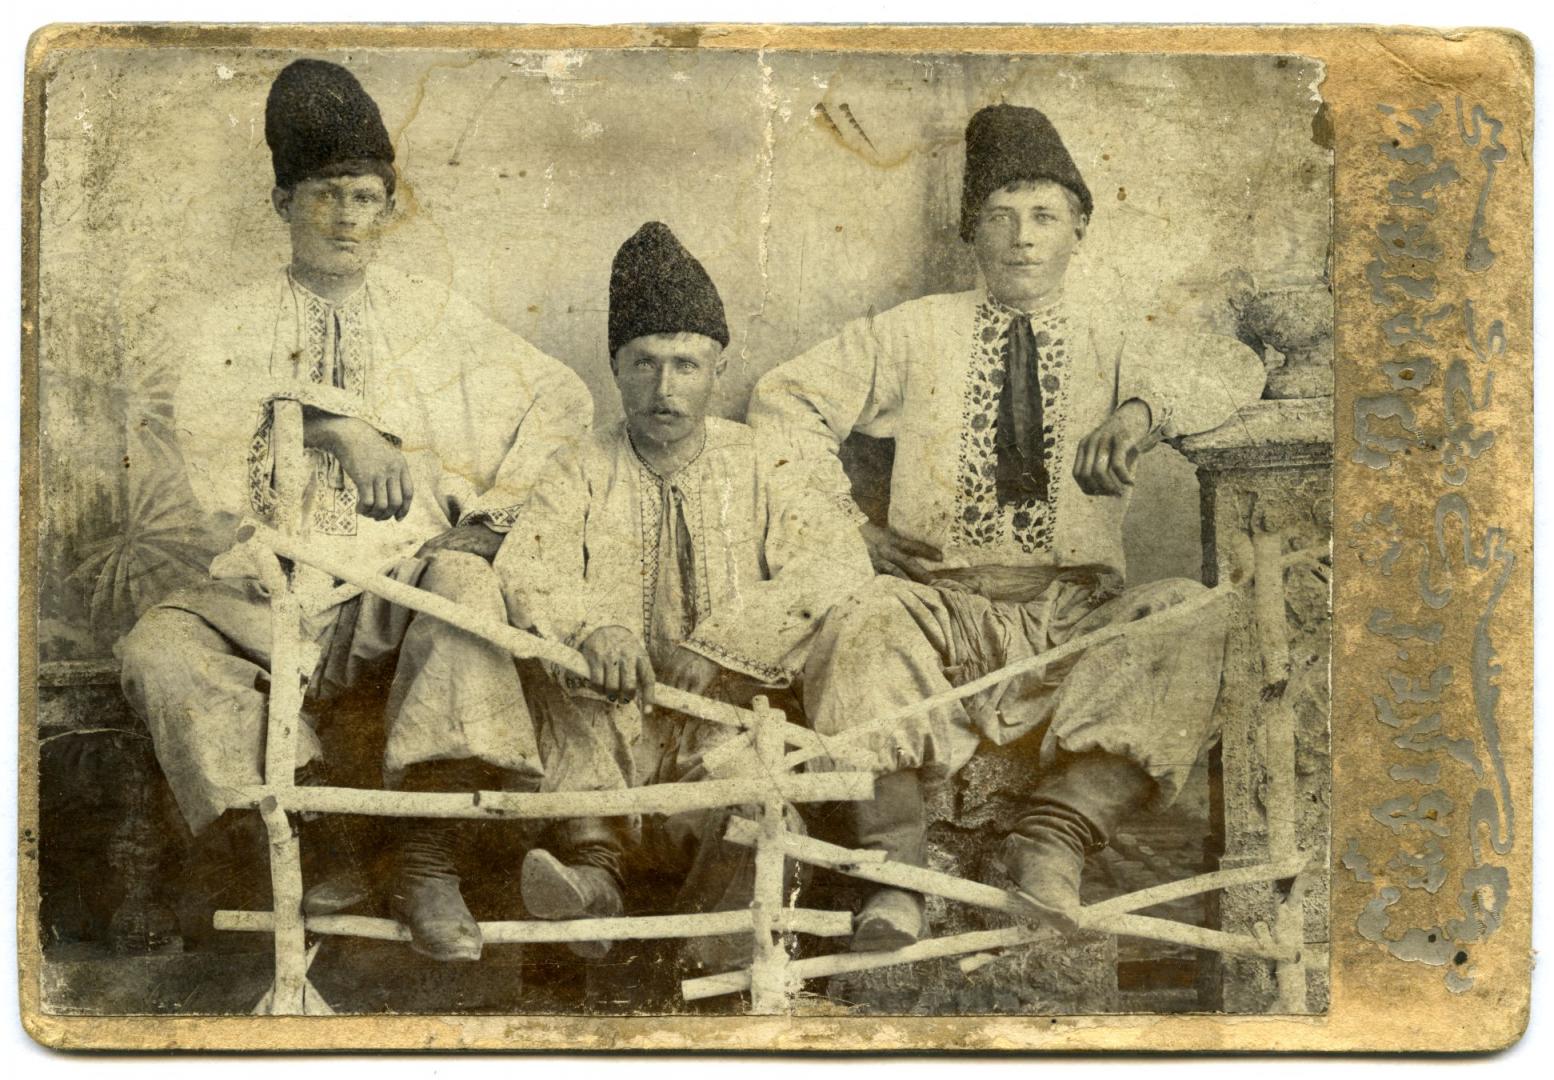 Photo. Three young men wearing folk attire